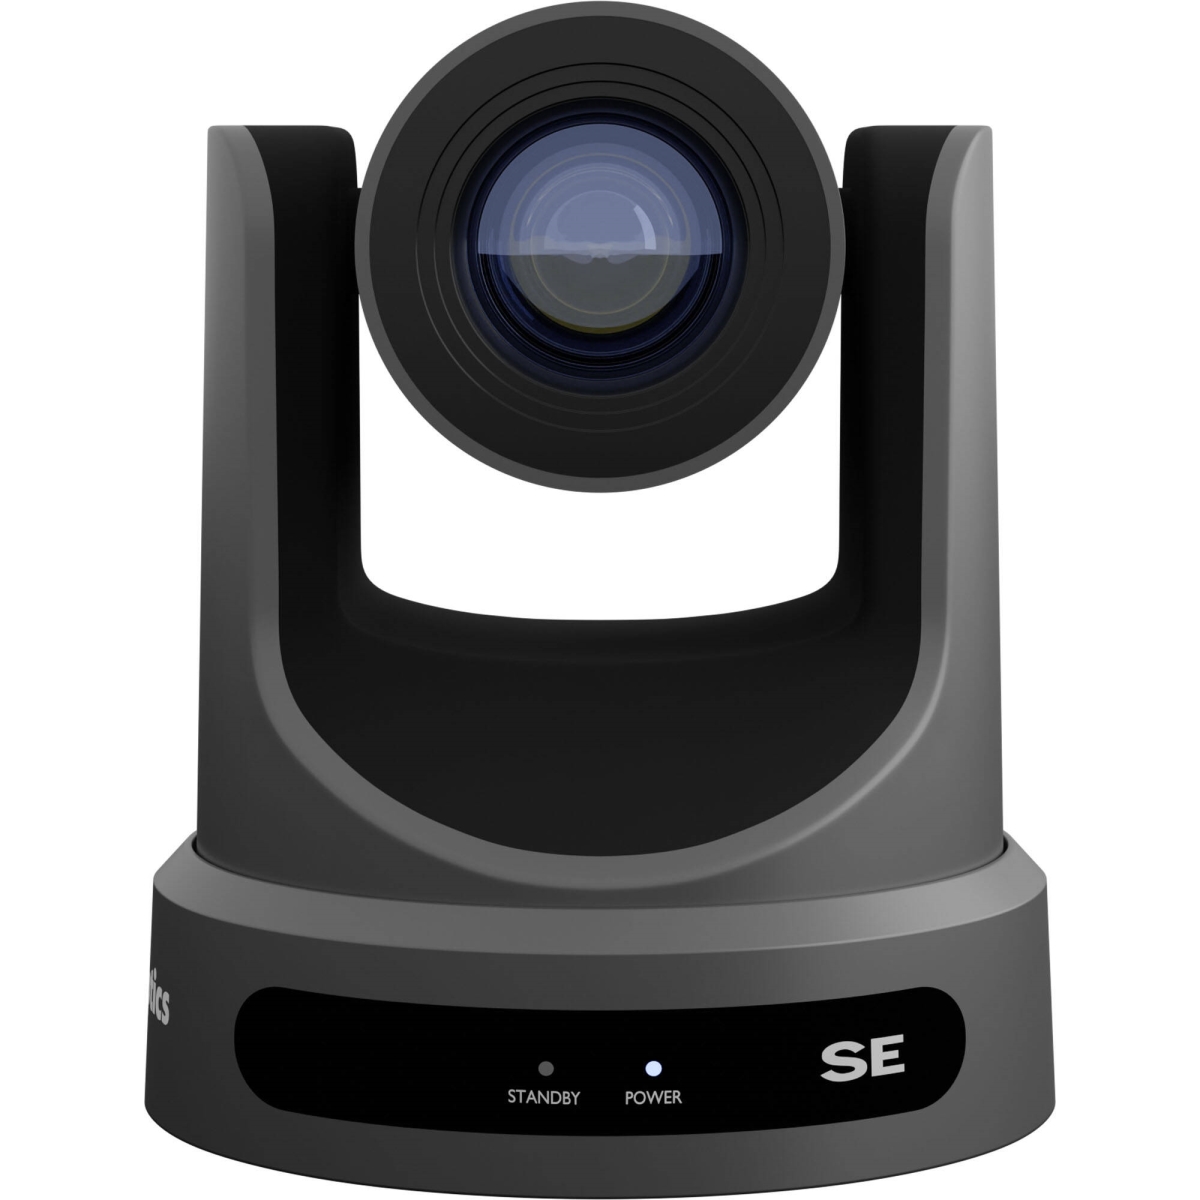 Pcordenador personal Move SE SDI&#44; HDMI & USB & IP PTZ Camera with 30X Optical Zoom&#44; Gray